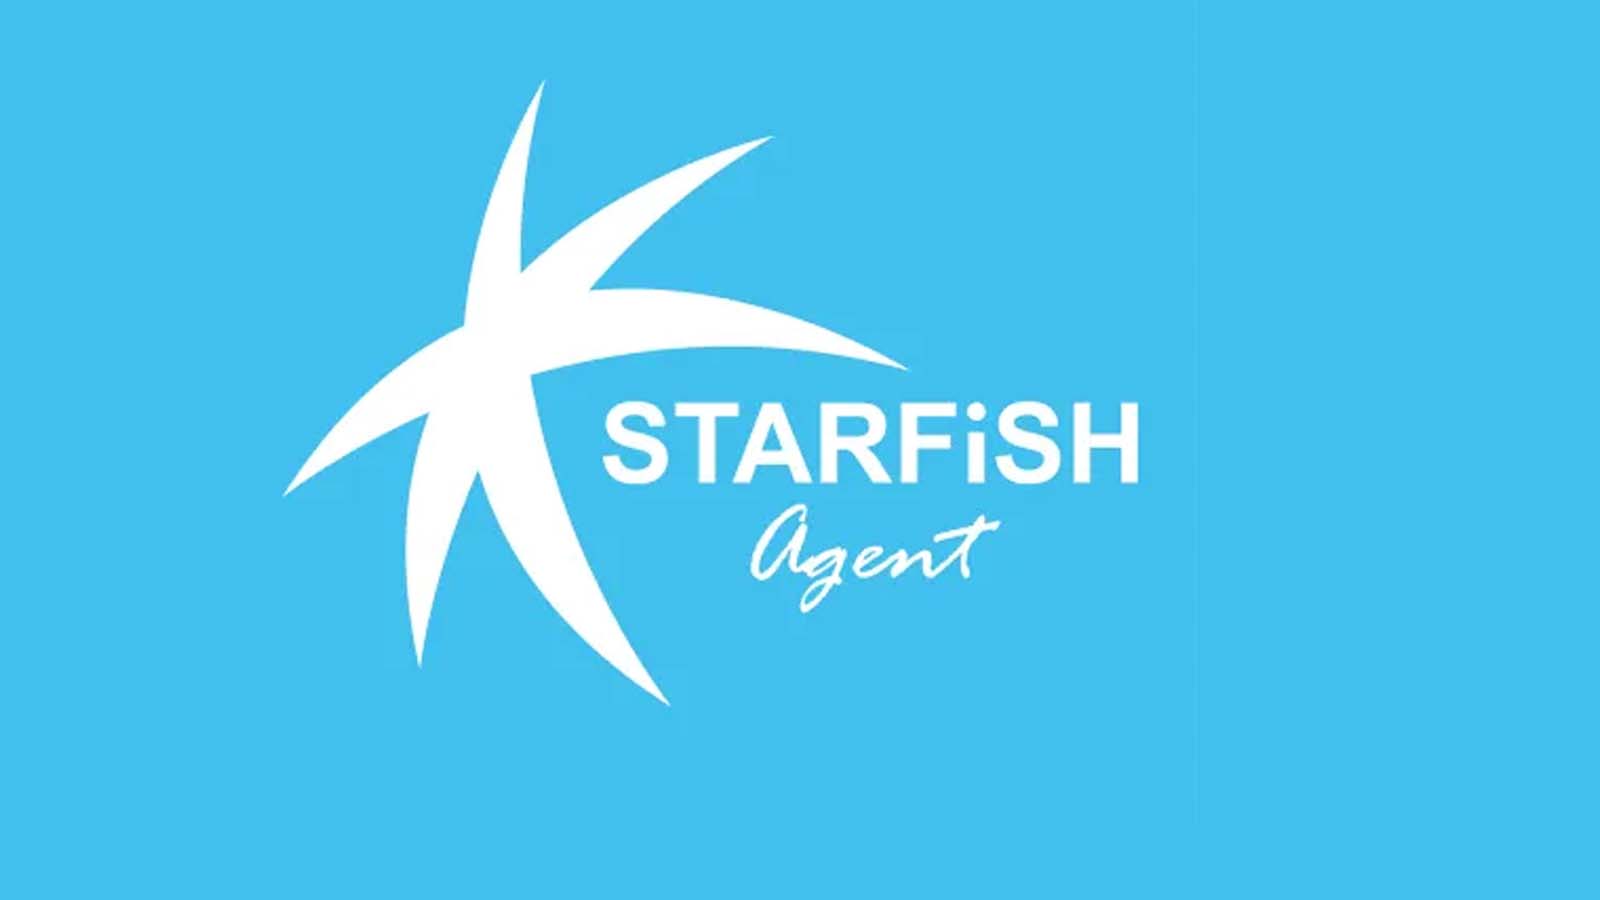 STARFiSH Concept 星予國際